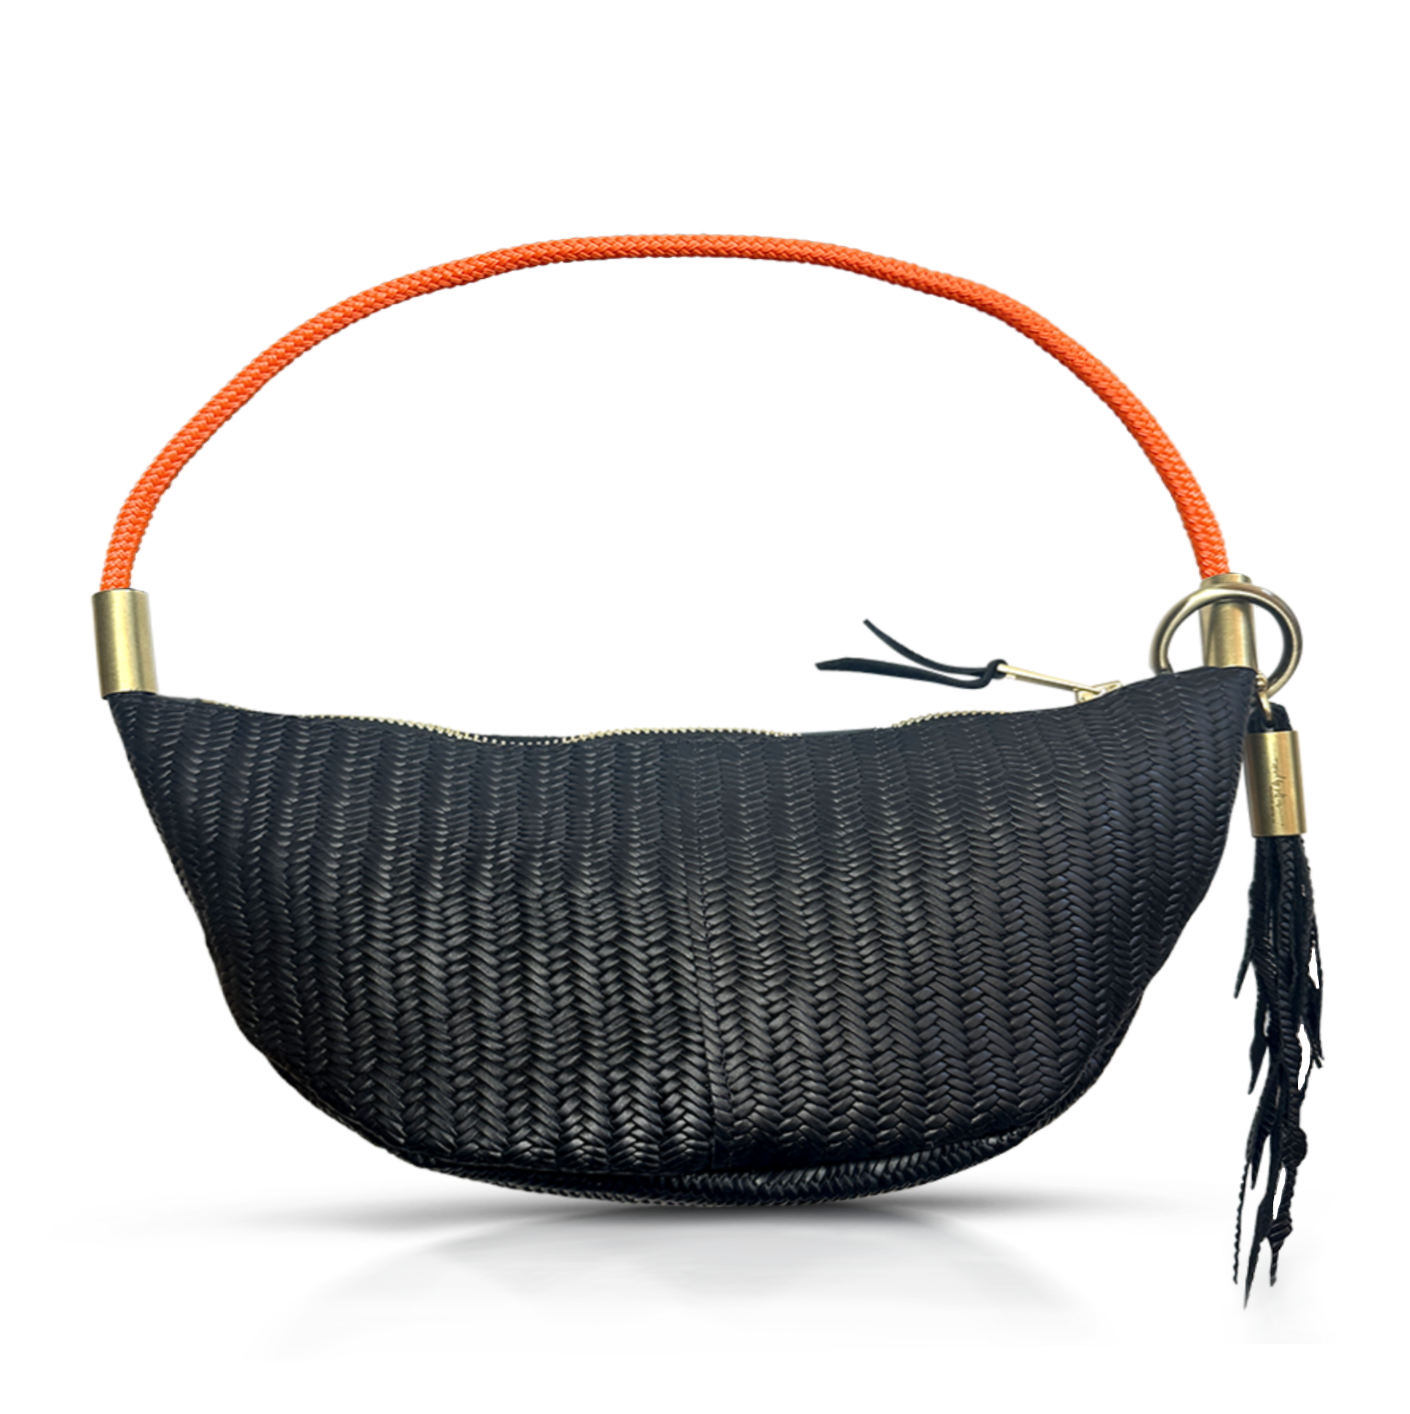 black basketweave leather sling bag with neon orange dock line handle